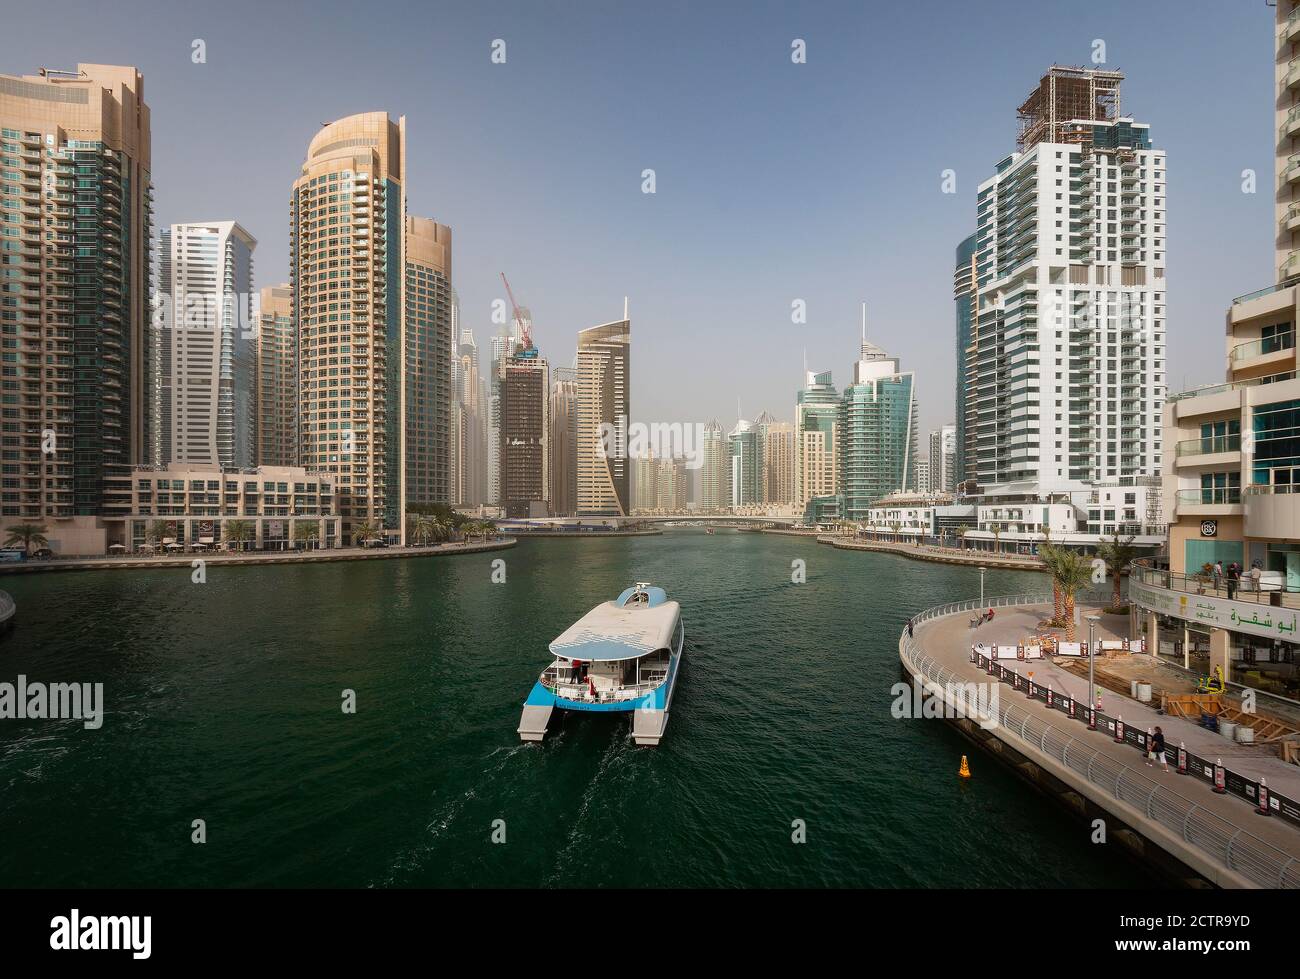 A catamaran-style yacht passes through the marina giving tourists views of the skyscrapers in Dubai, United Arab Emirates (UAE) Stock Photo